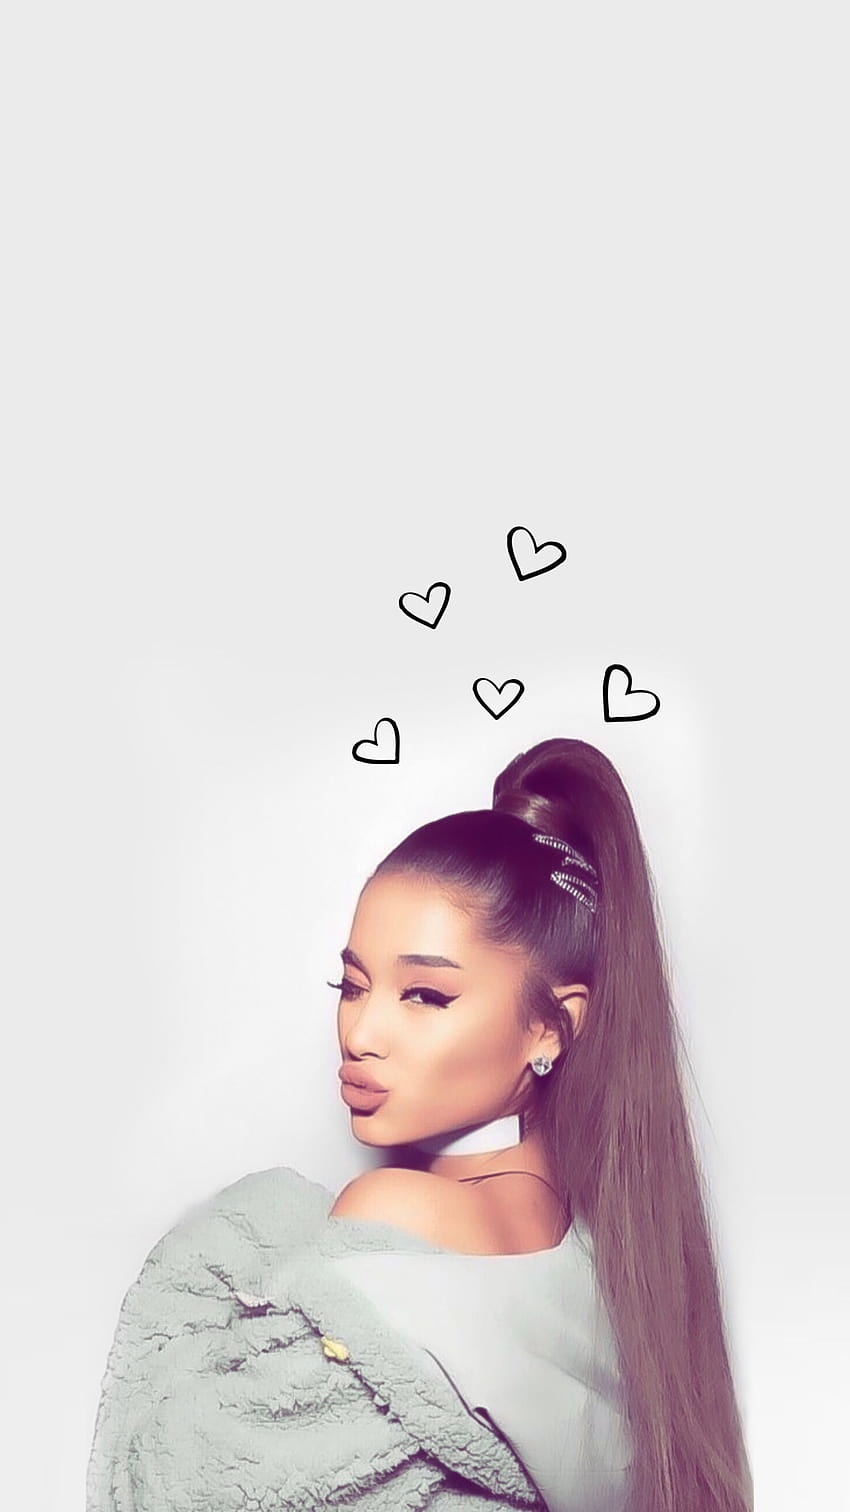 Ariana Grande pink aesthetic wallpaper by juli3569 on DeviantArt